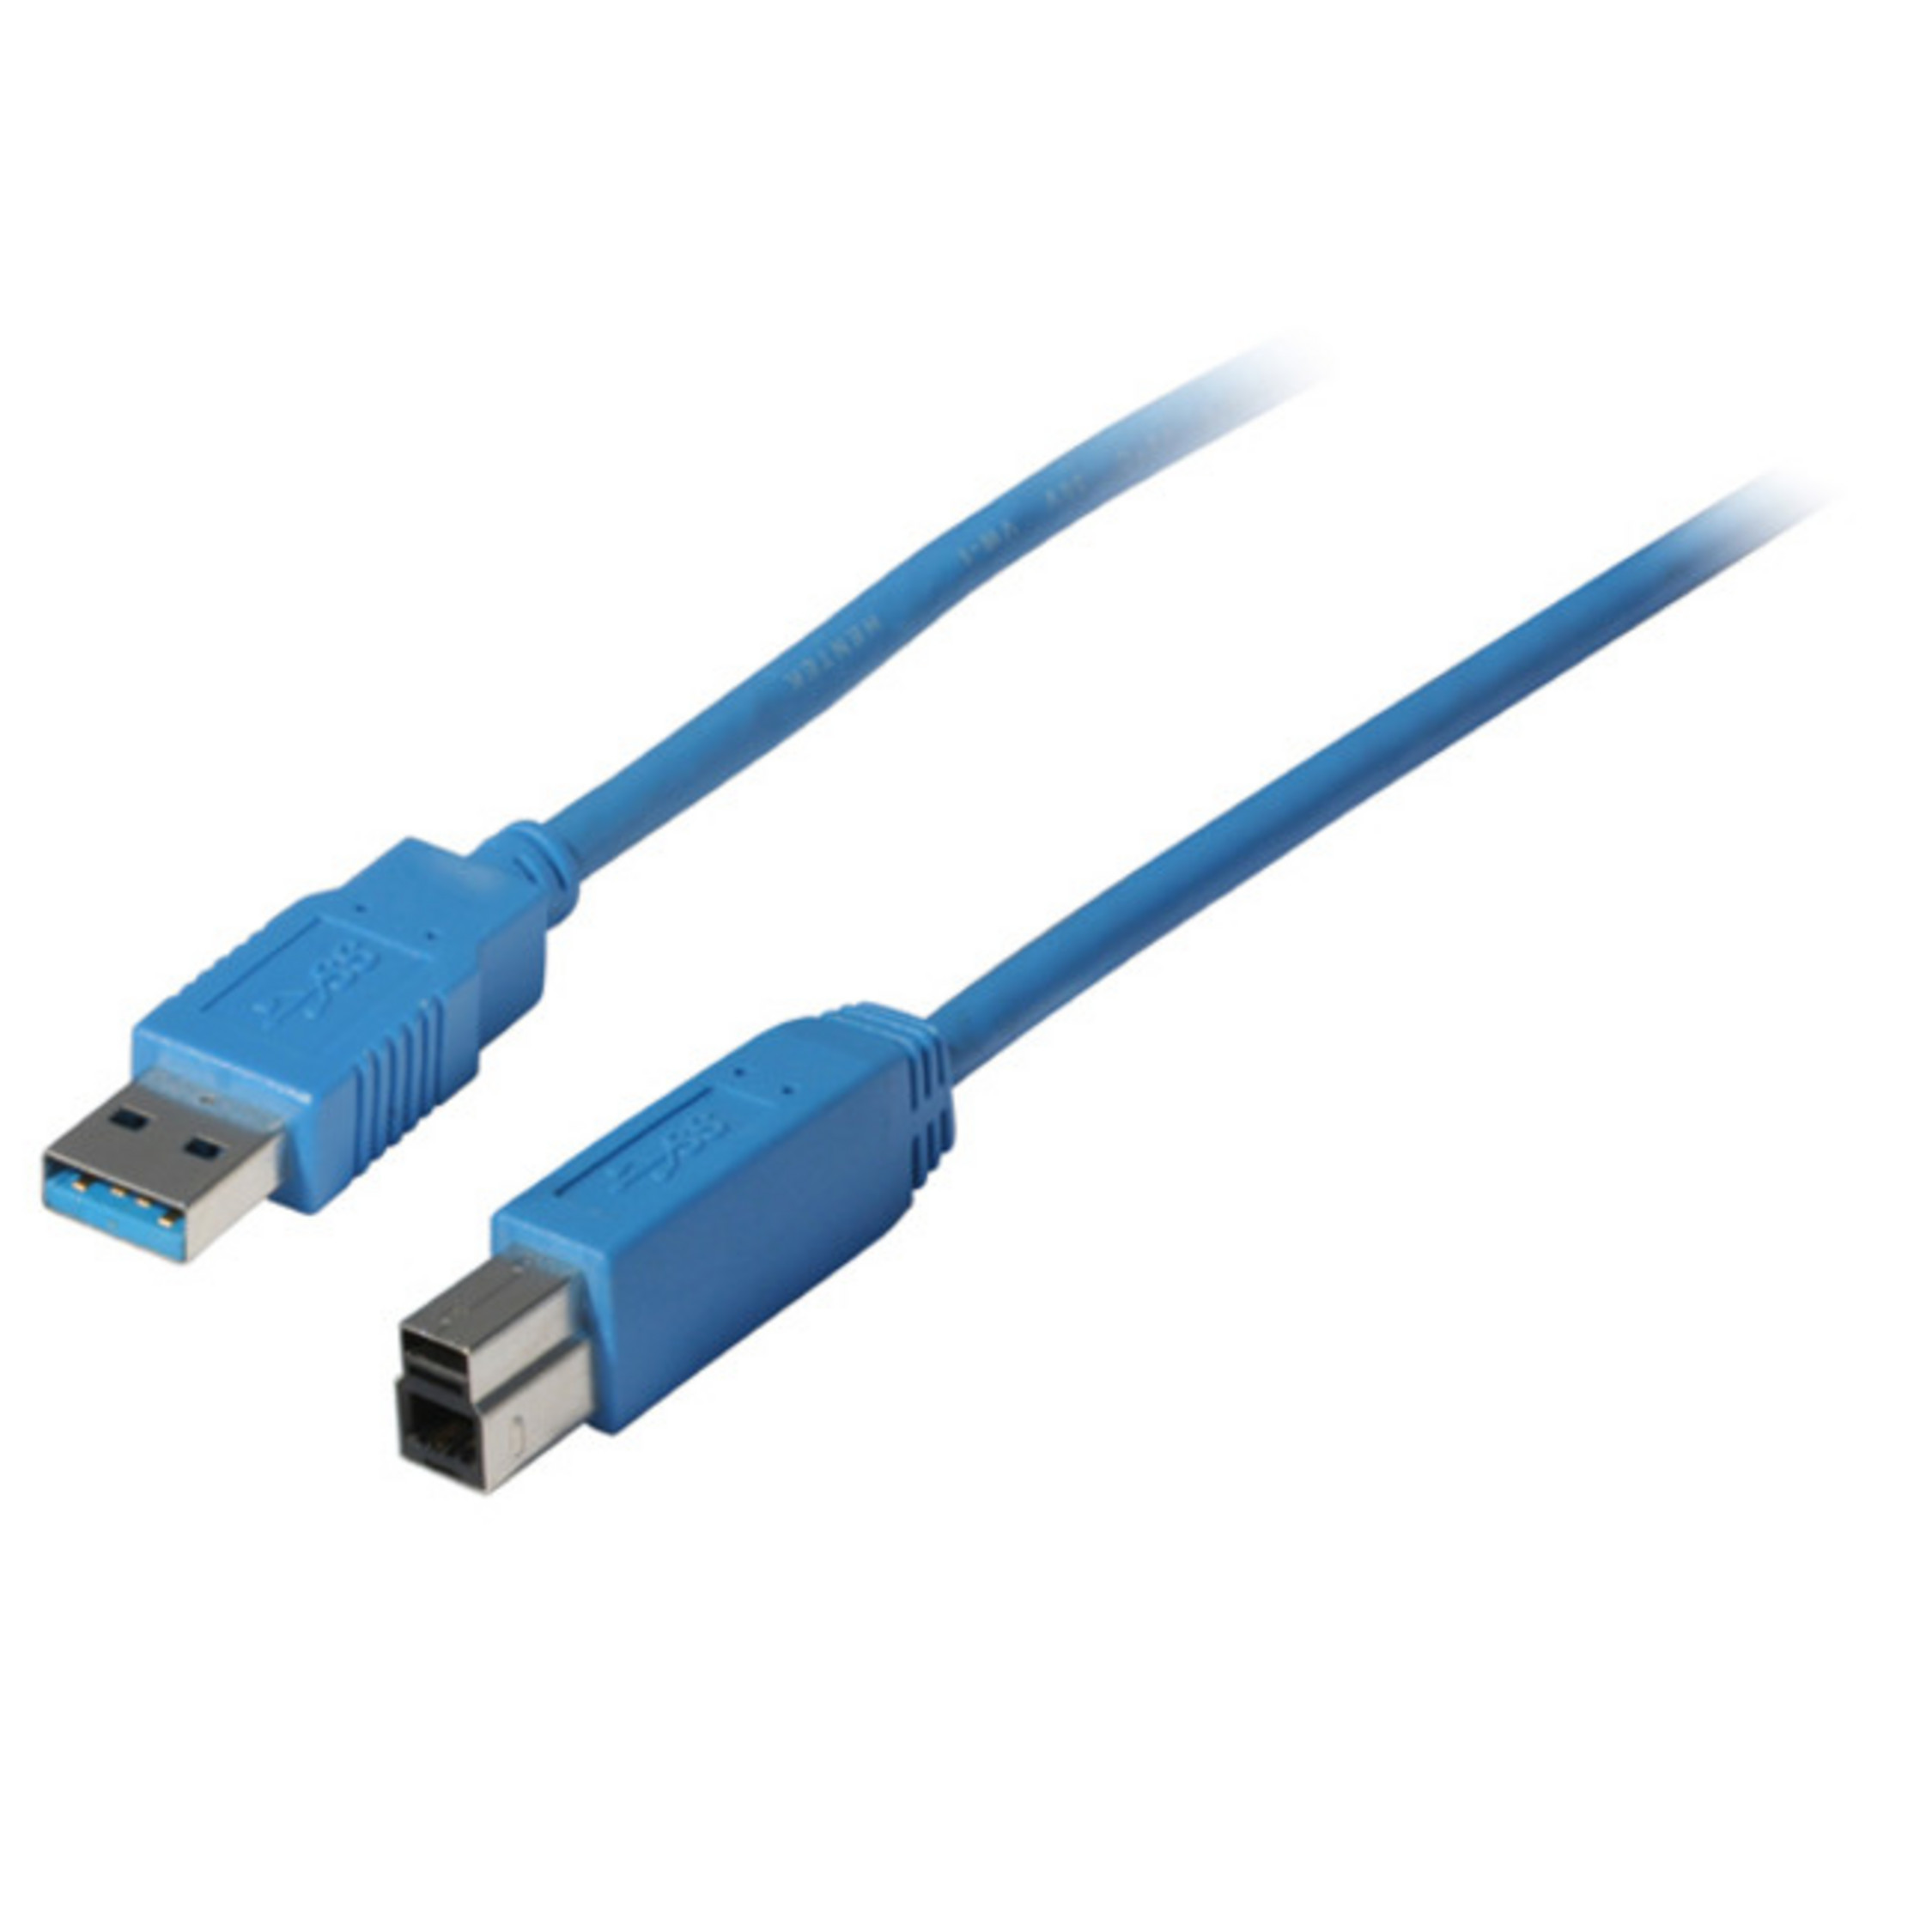 Kabel USB Stecker blau B / USB S/CONN 0,5m 3.0 CONNECTIVITY Stecker MAXIMUM Kabel A USB